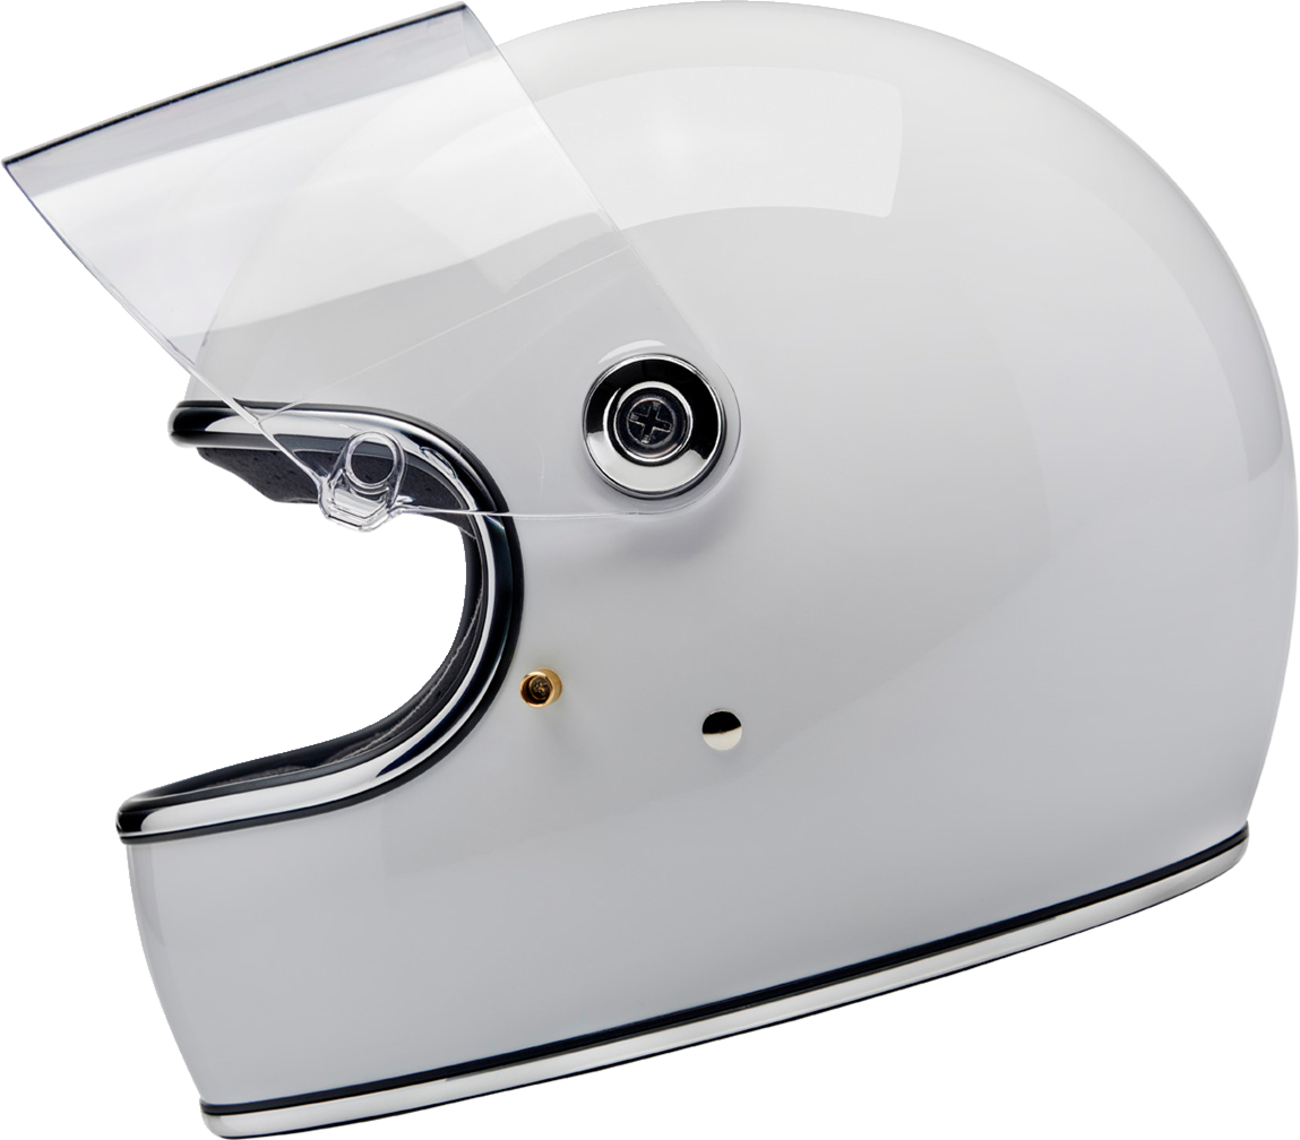 BILTWELL Gringo S Helmet - Gloss White - 2XL 1003-102-506